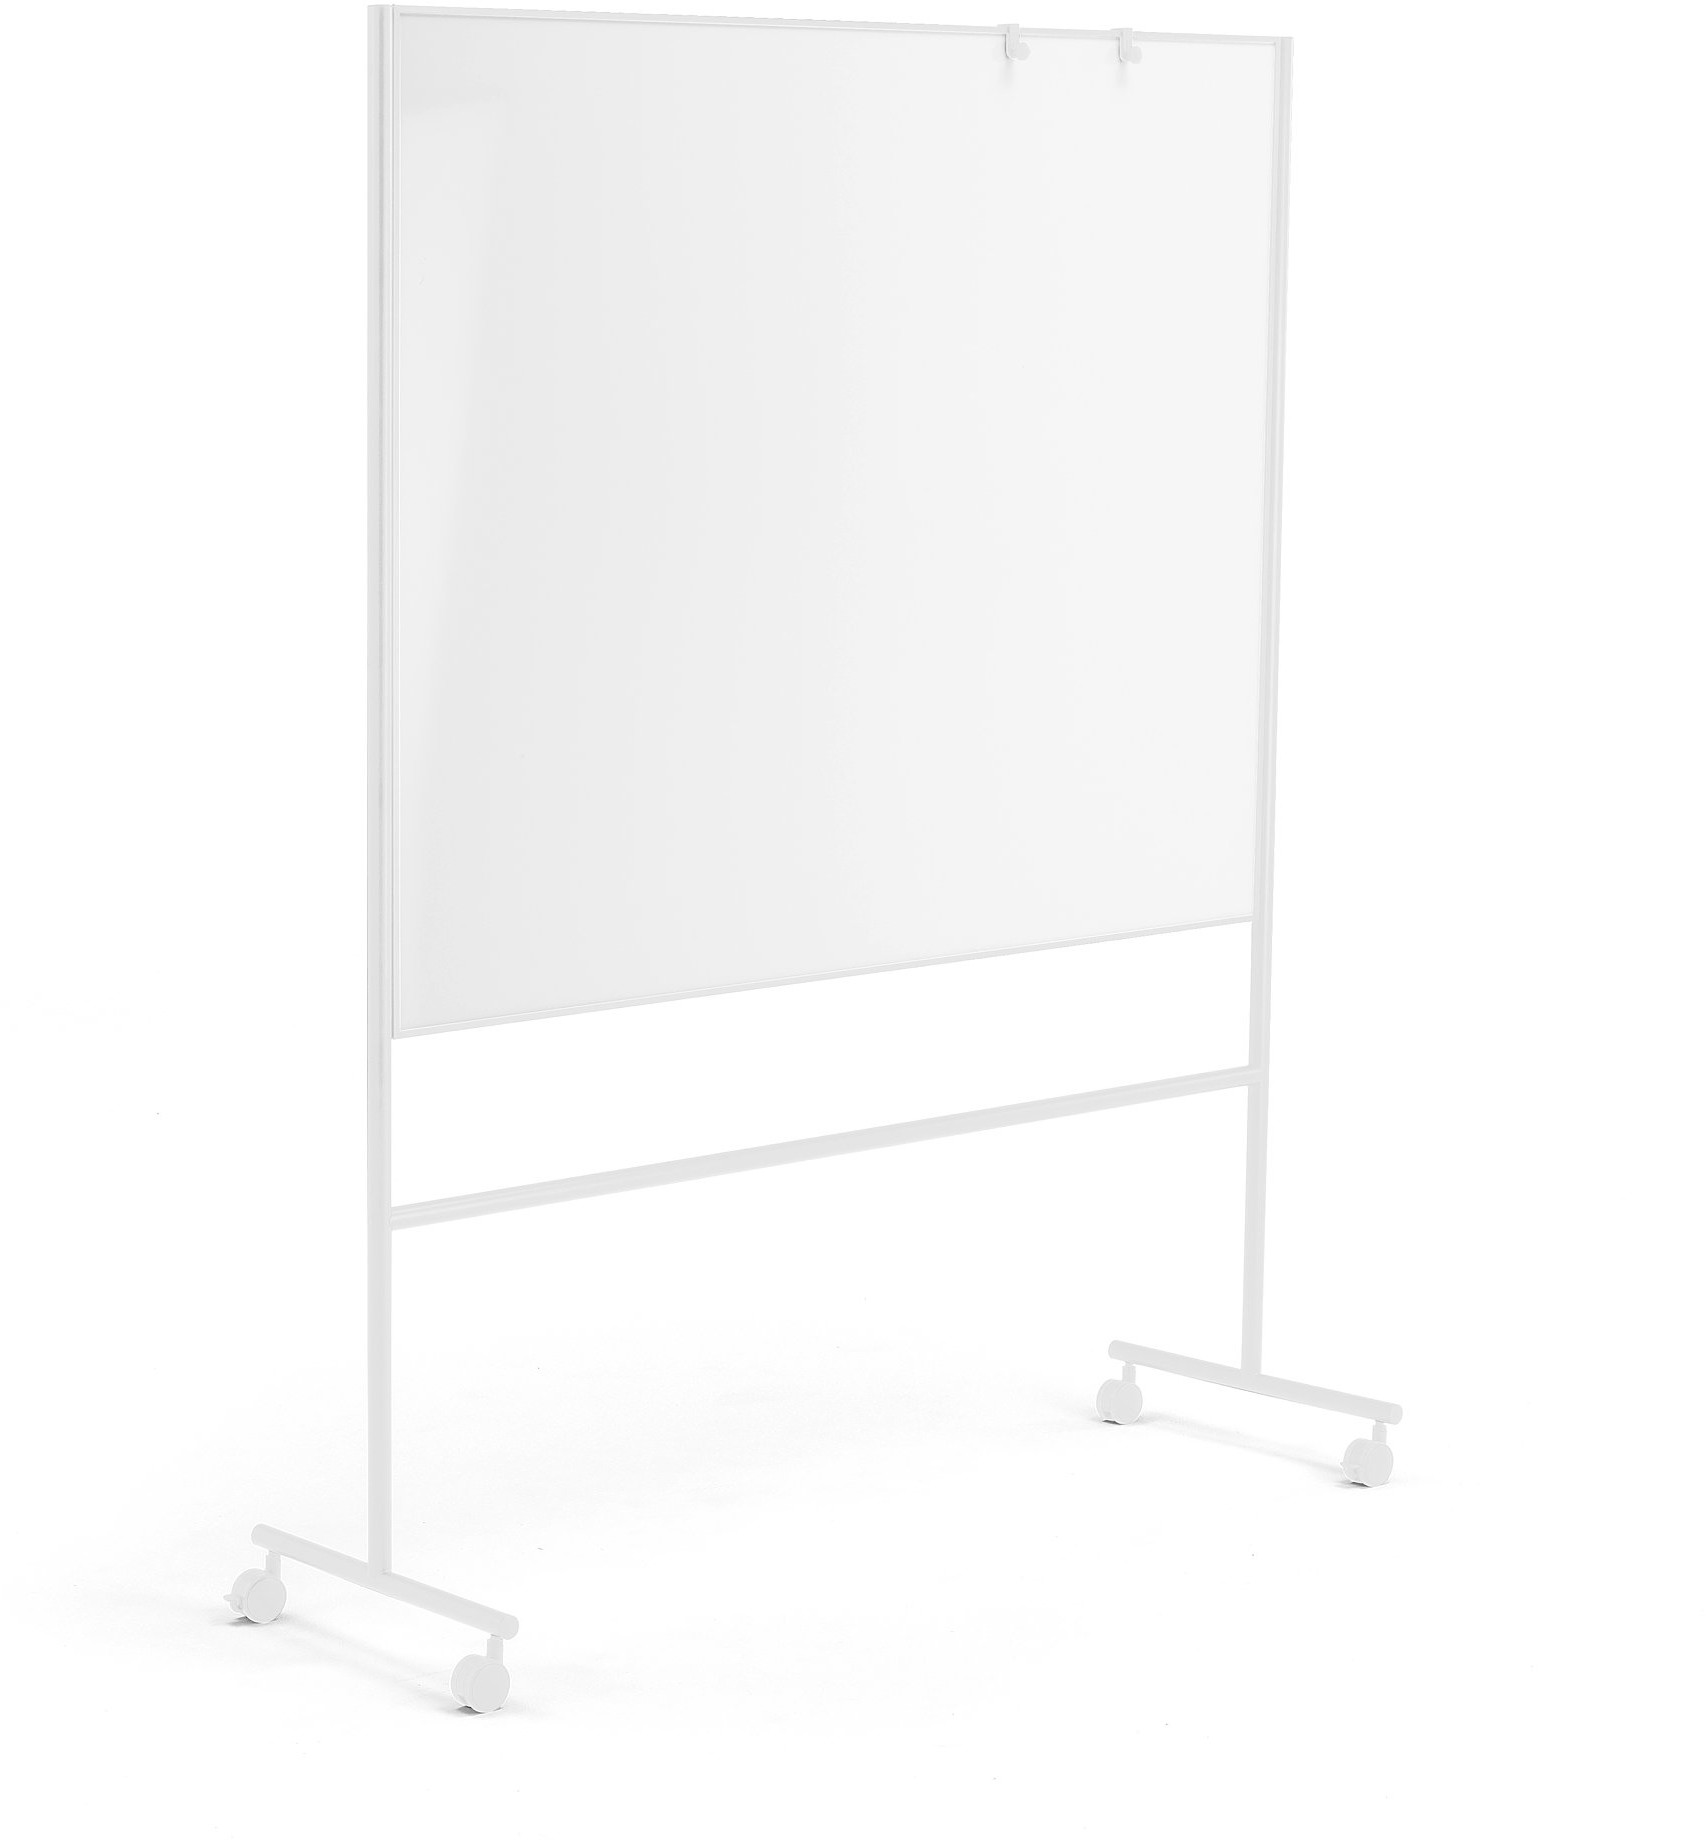 AJ Produkty #e- ONE Mobil whiteboard doublesided white 1500x1960 (1500x1200)